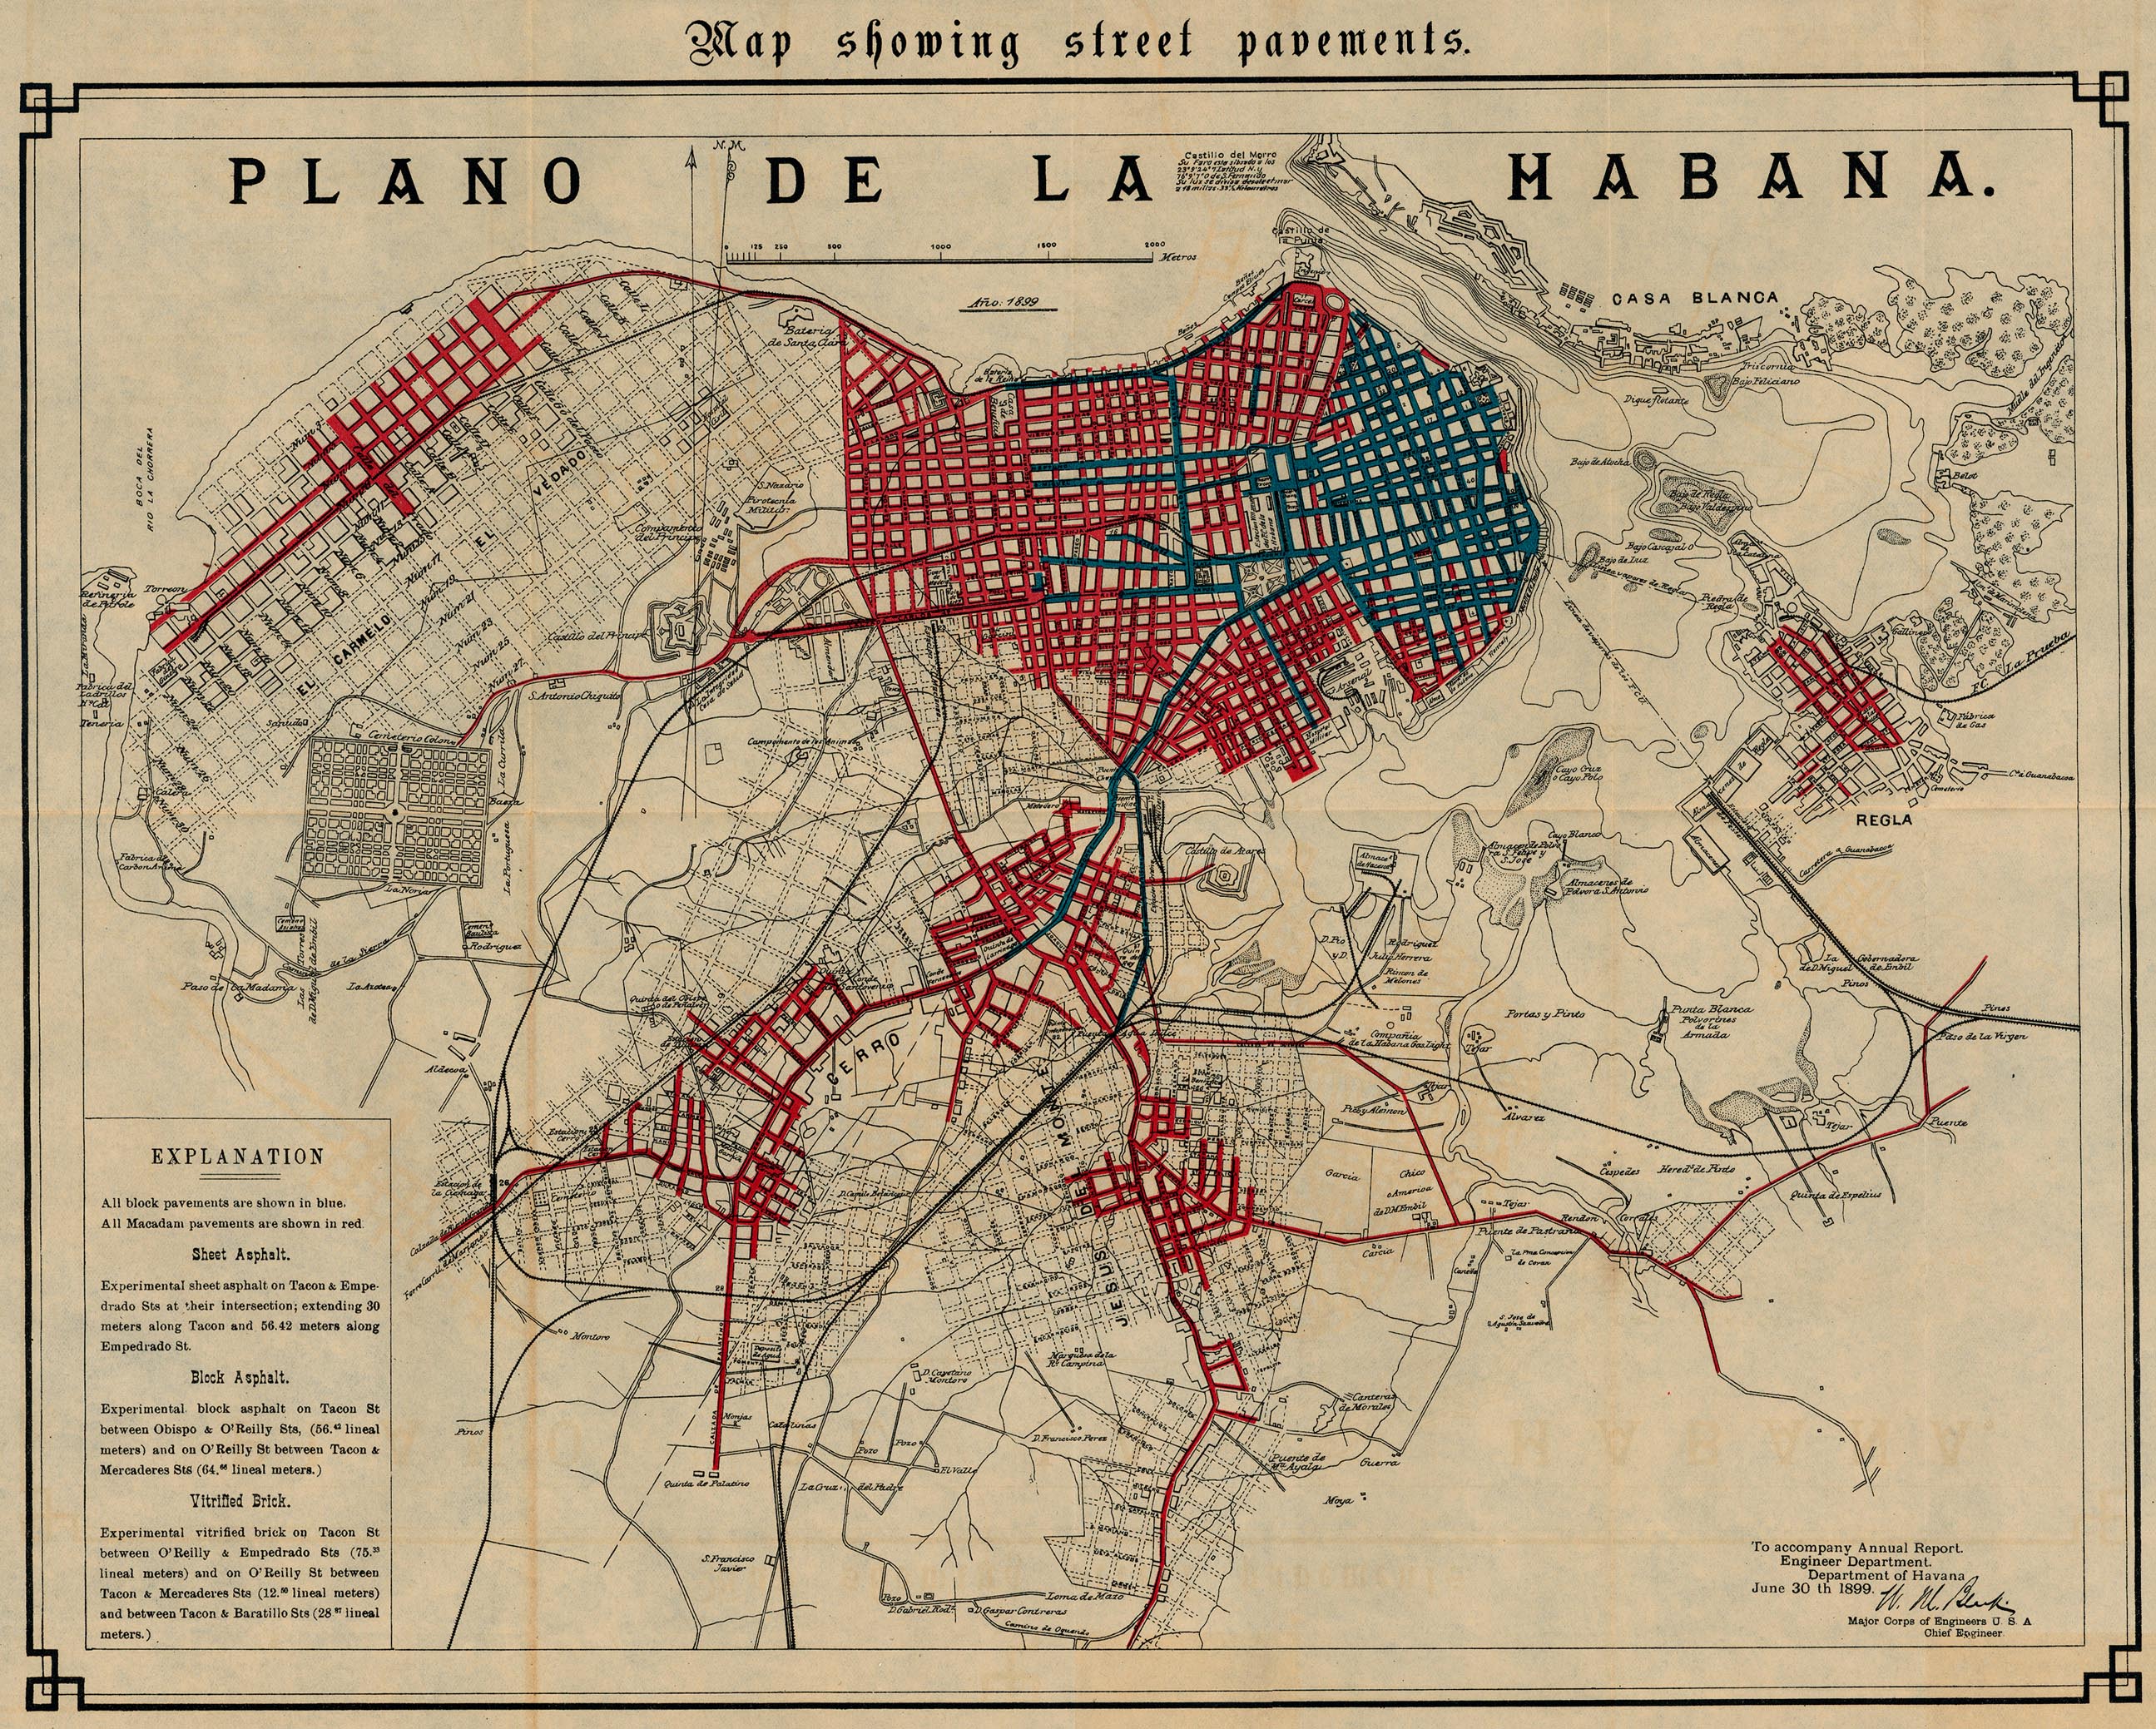 Havana Street Pavements Map, Cuba 1899